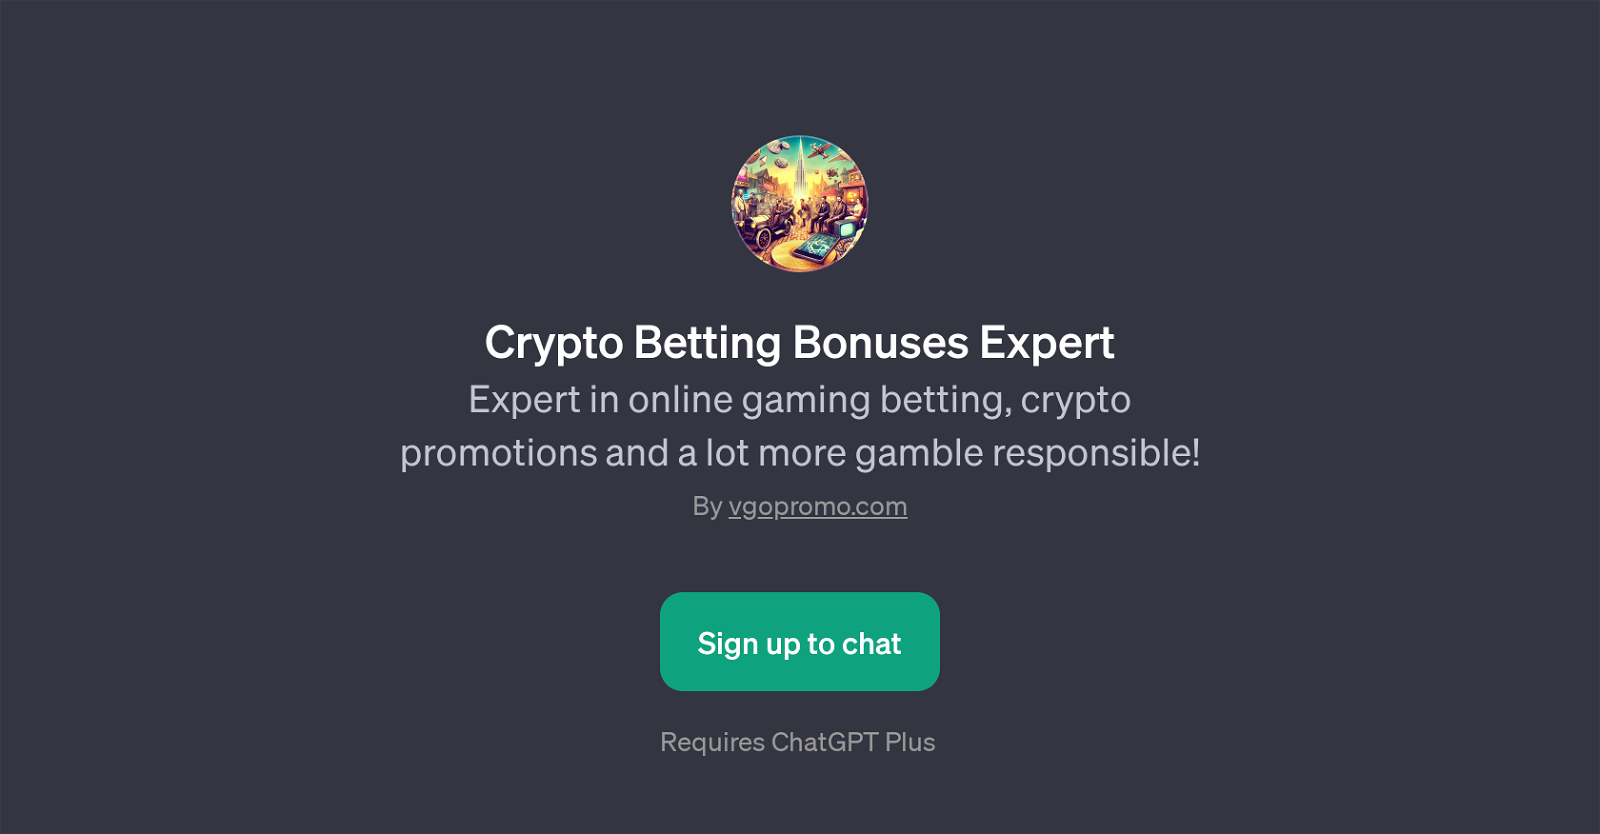 Crypto Betting Bonuses Expert website